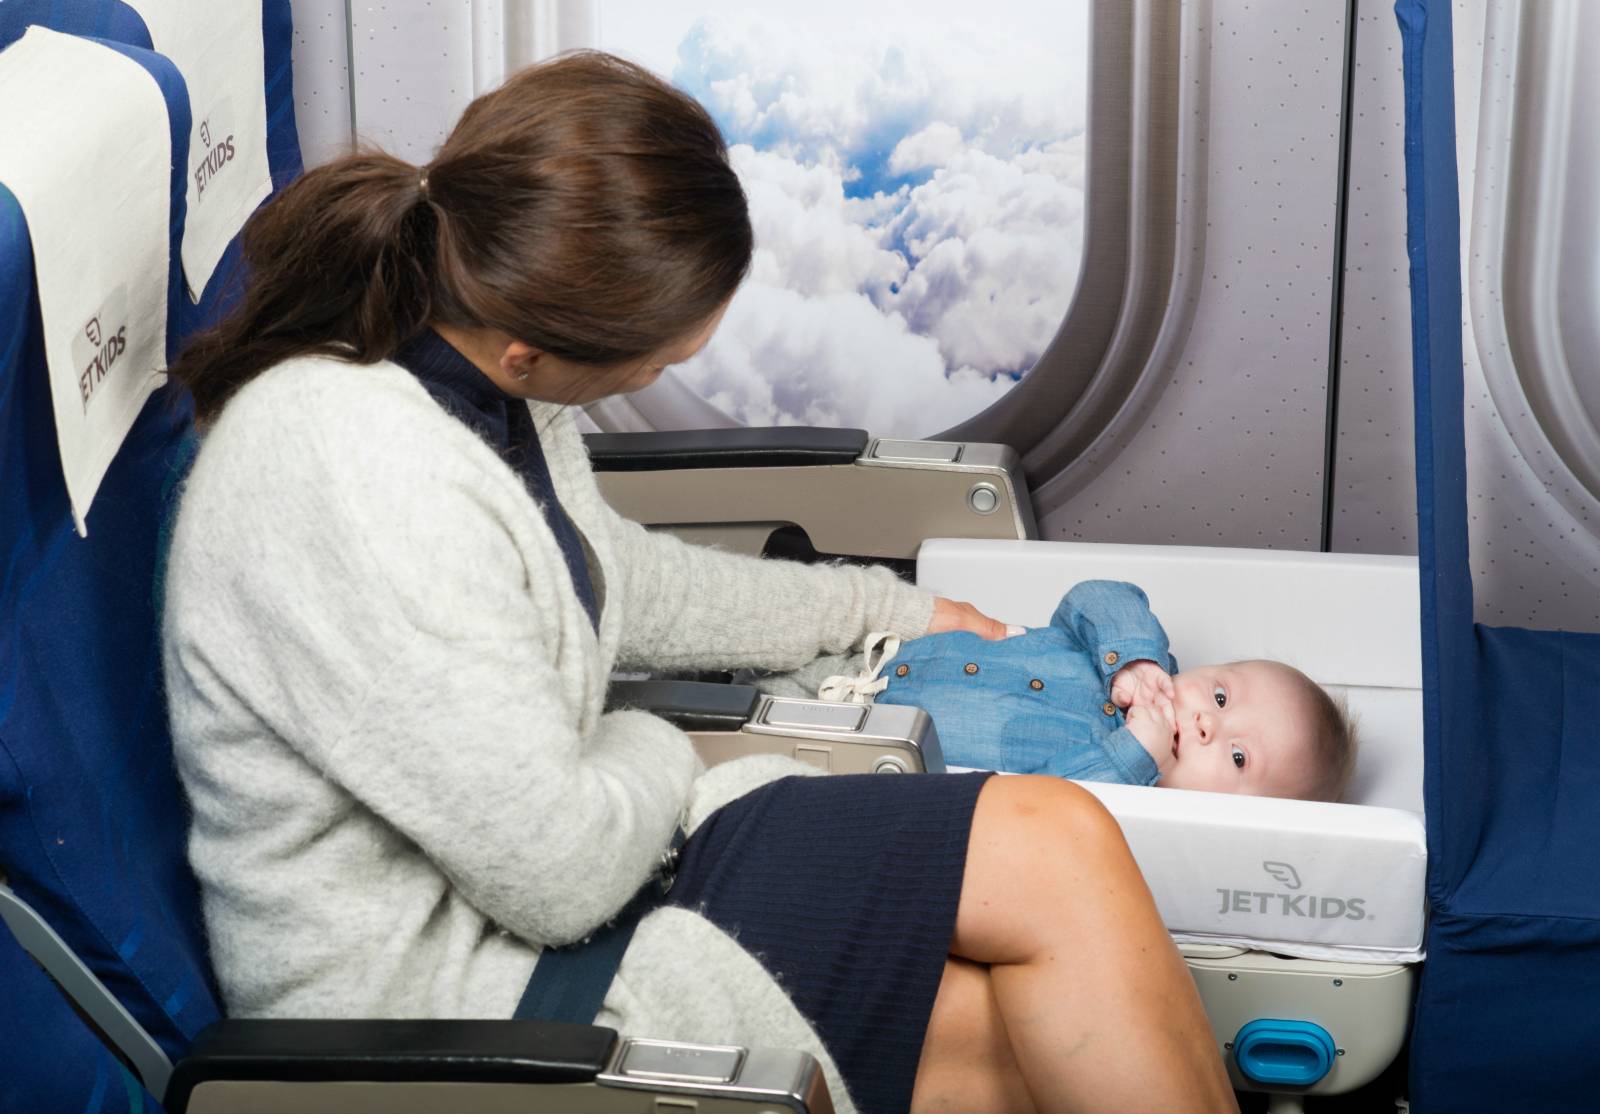 Ребенок на самолете с бабушкой. S7 люлька для новорожденных в самолете. Люлька в самолете для ребенка. Места в самолете для младенцев. Младенец в самолете.